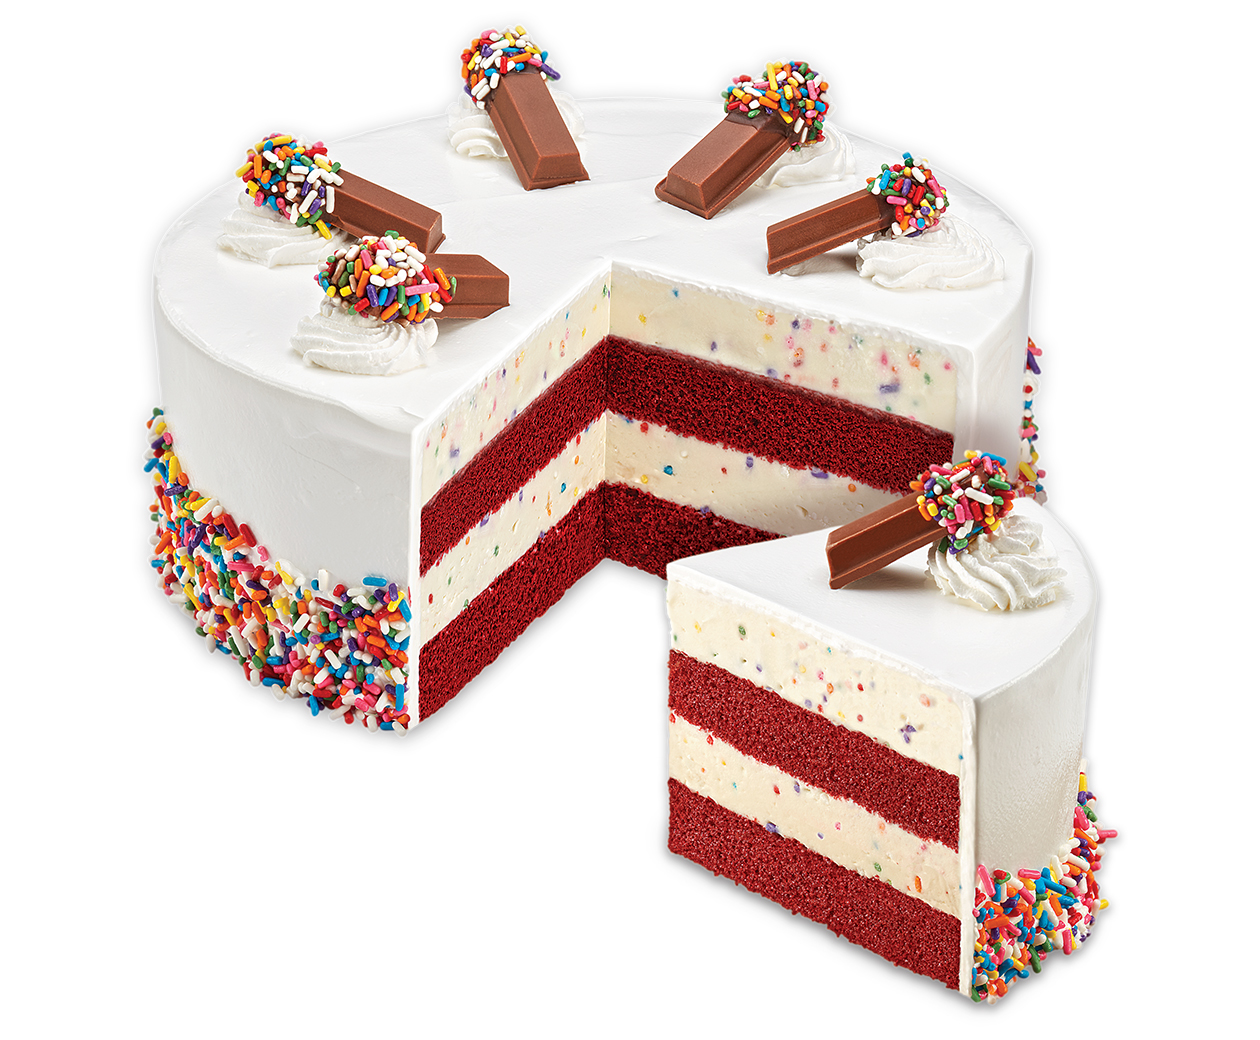 Cold Stone Creamery Signature Cakes - club kek roblox